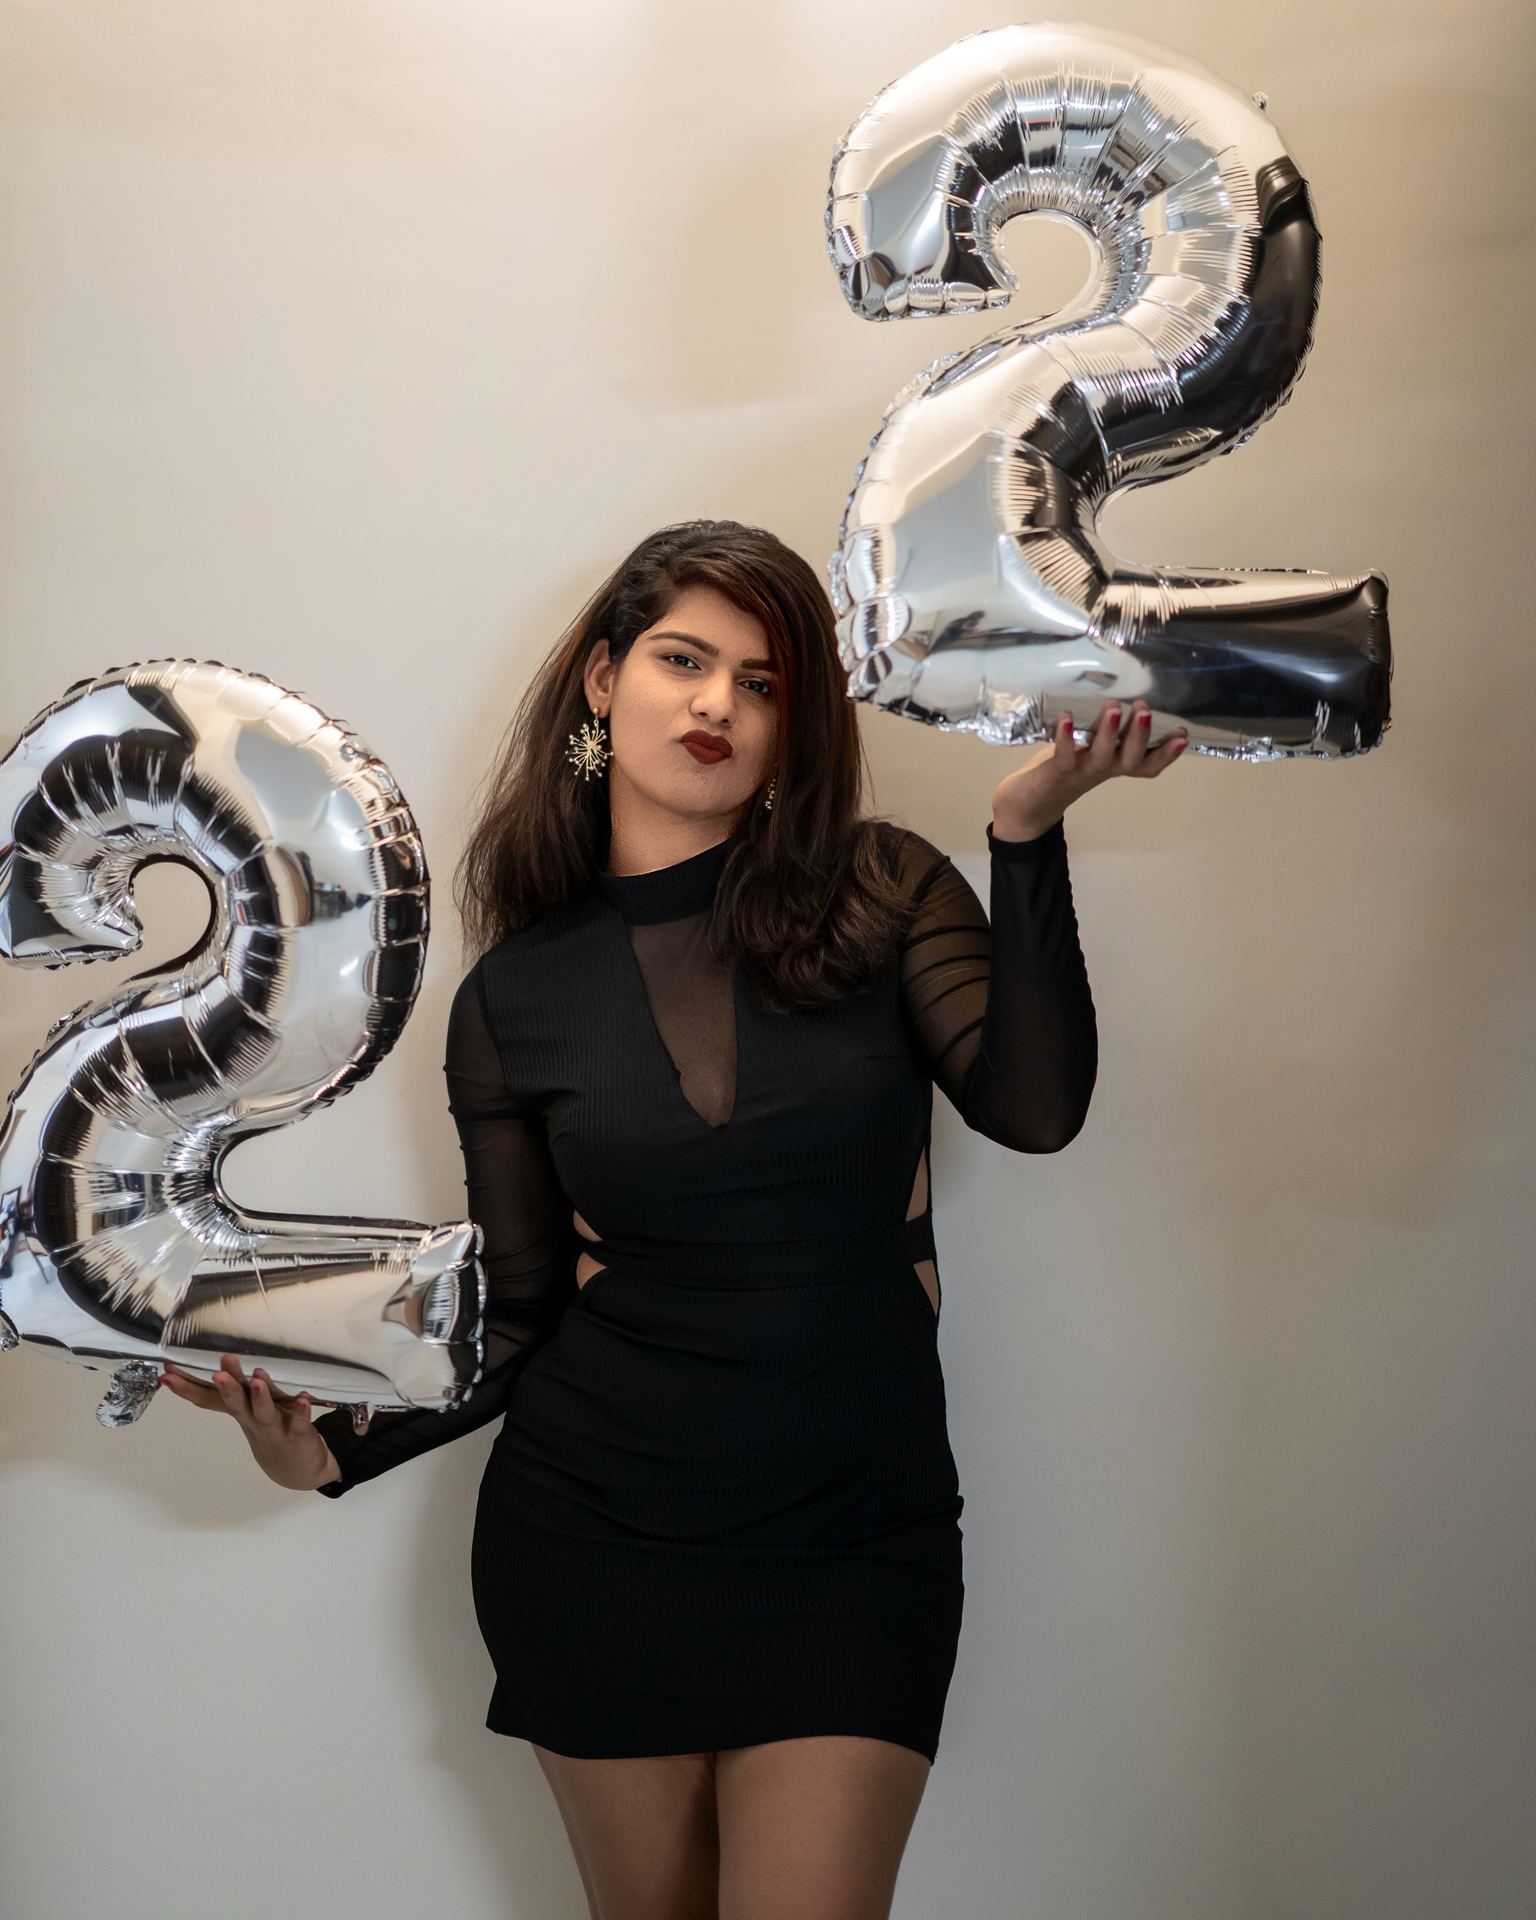 I’m finally 22! image